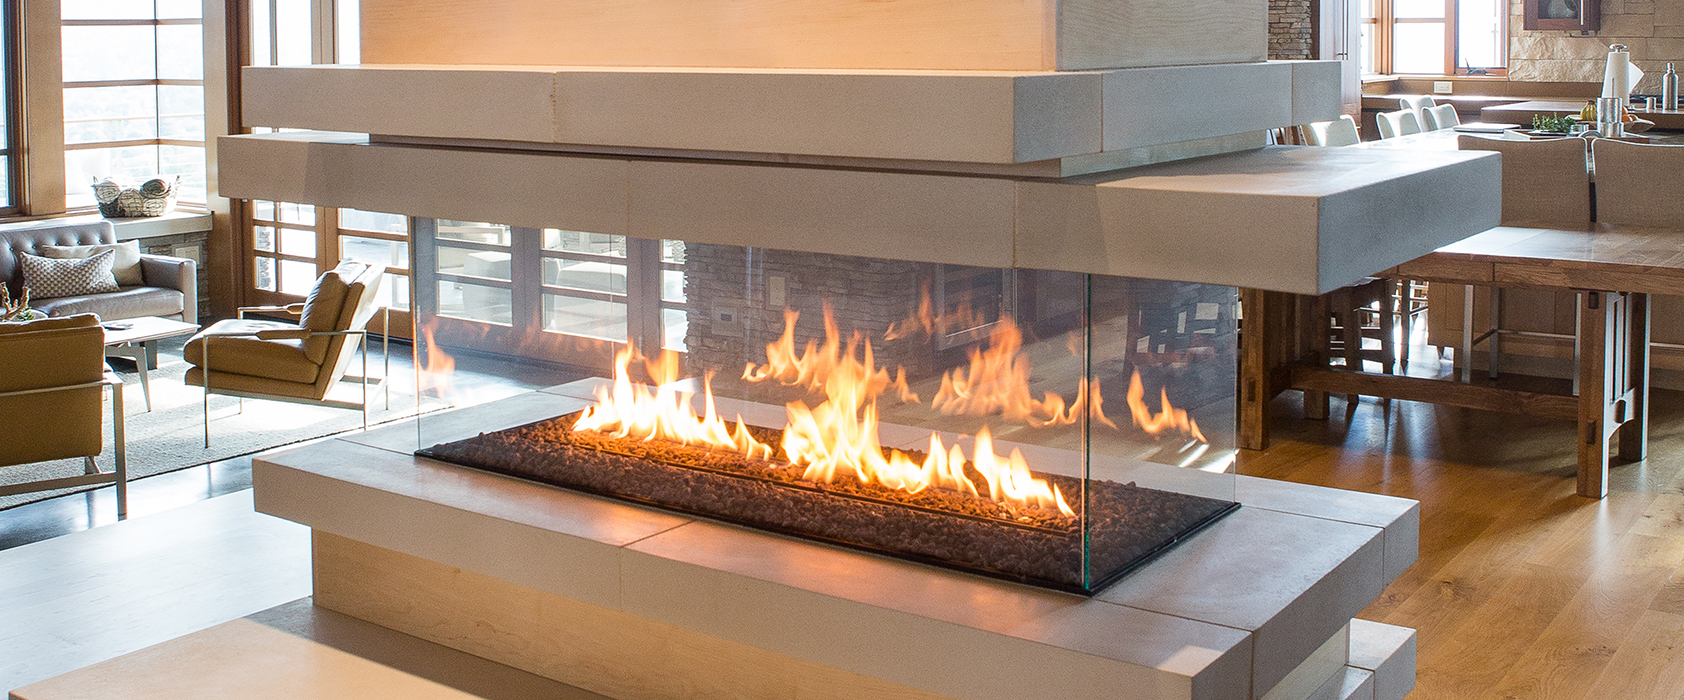 beautiful custom fireplace